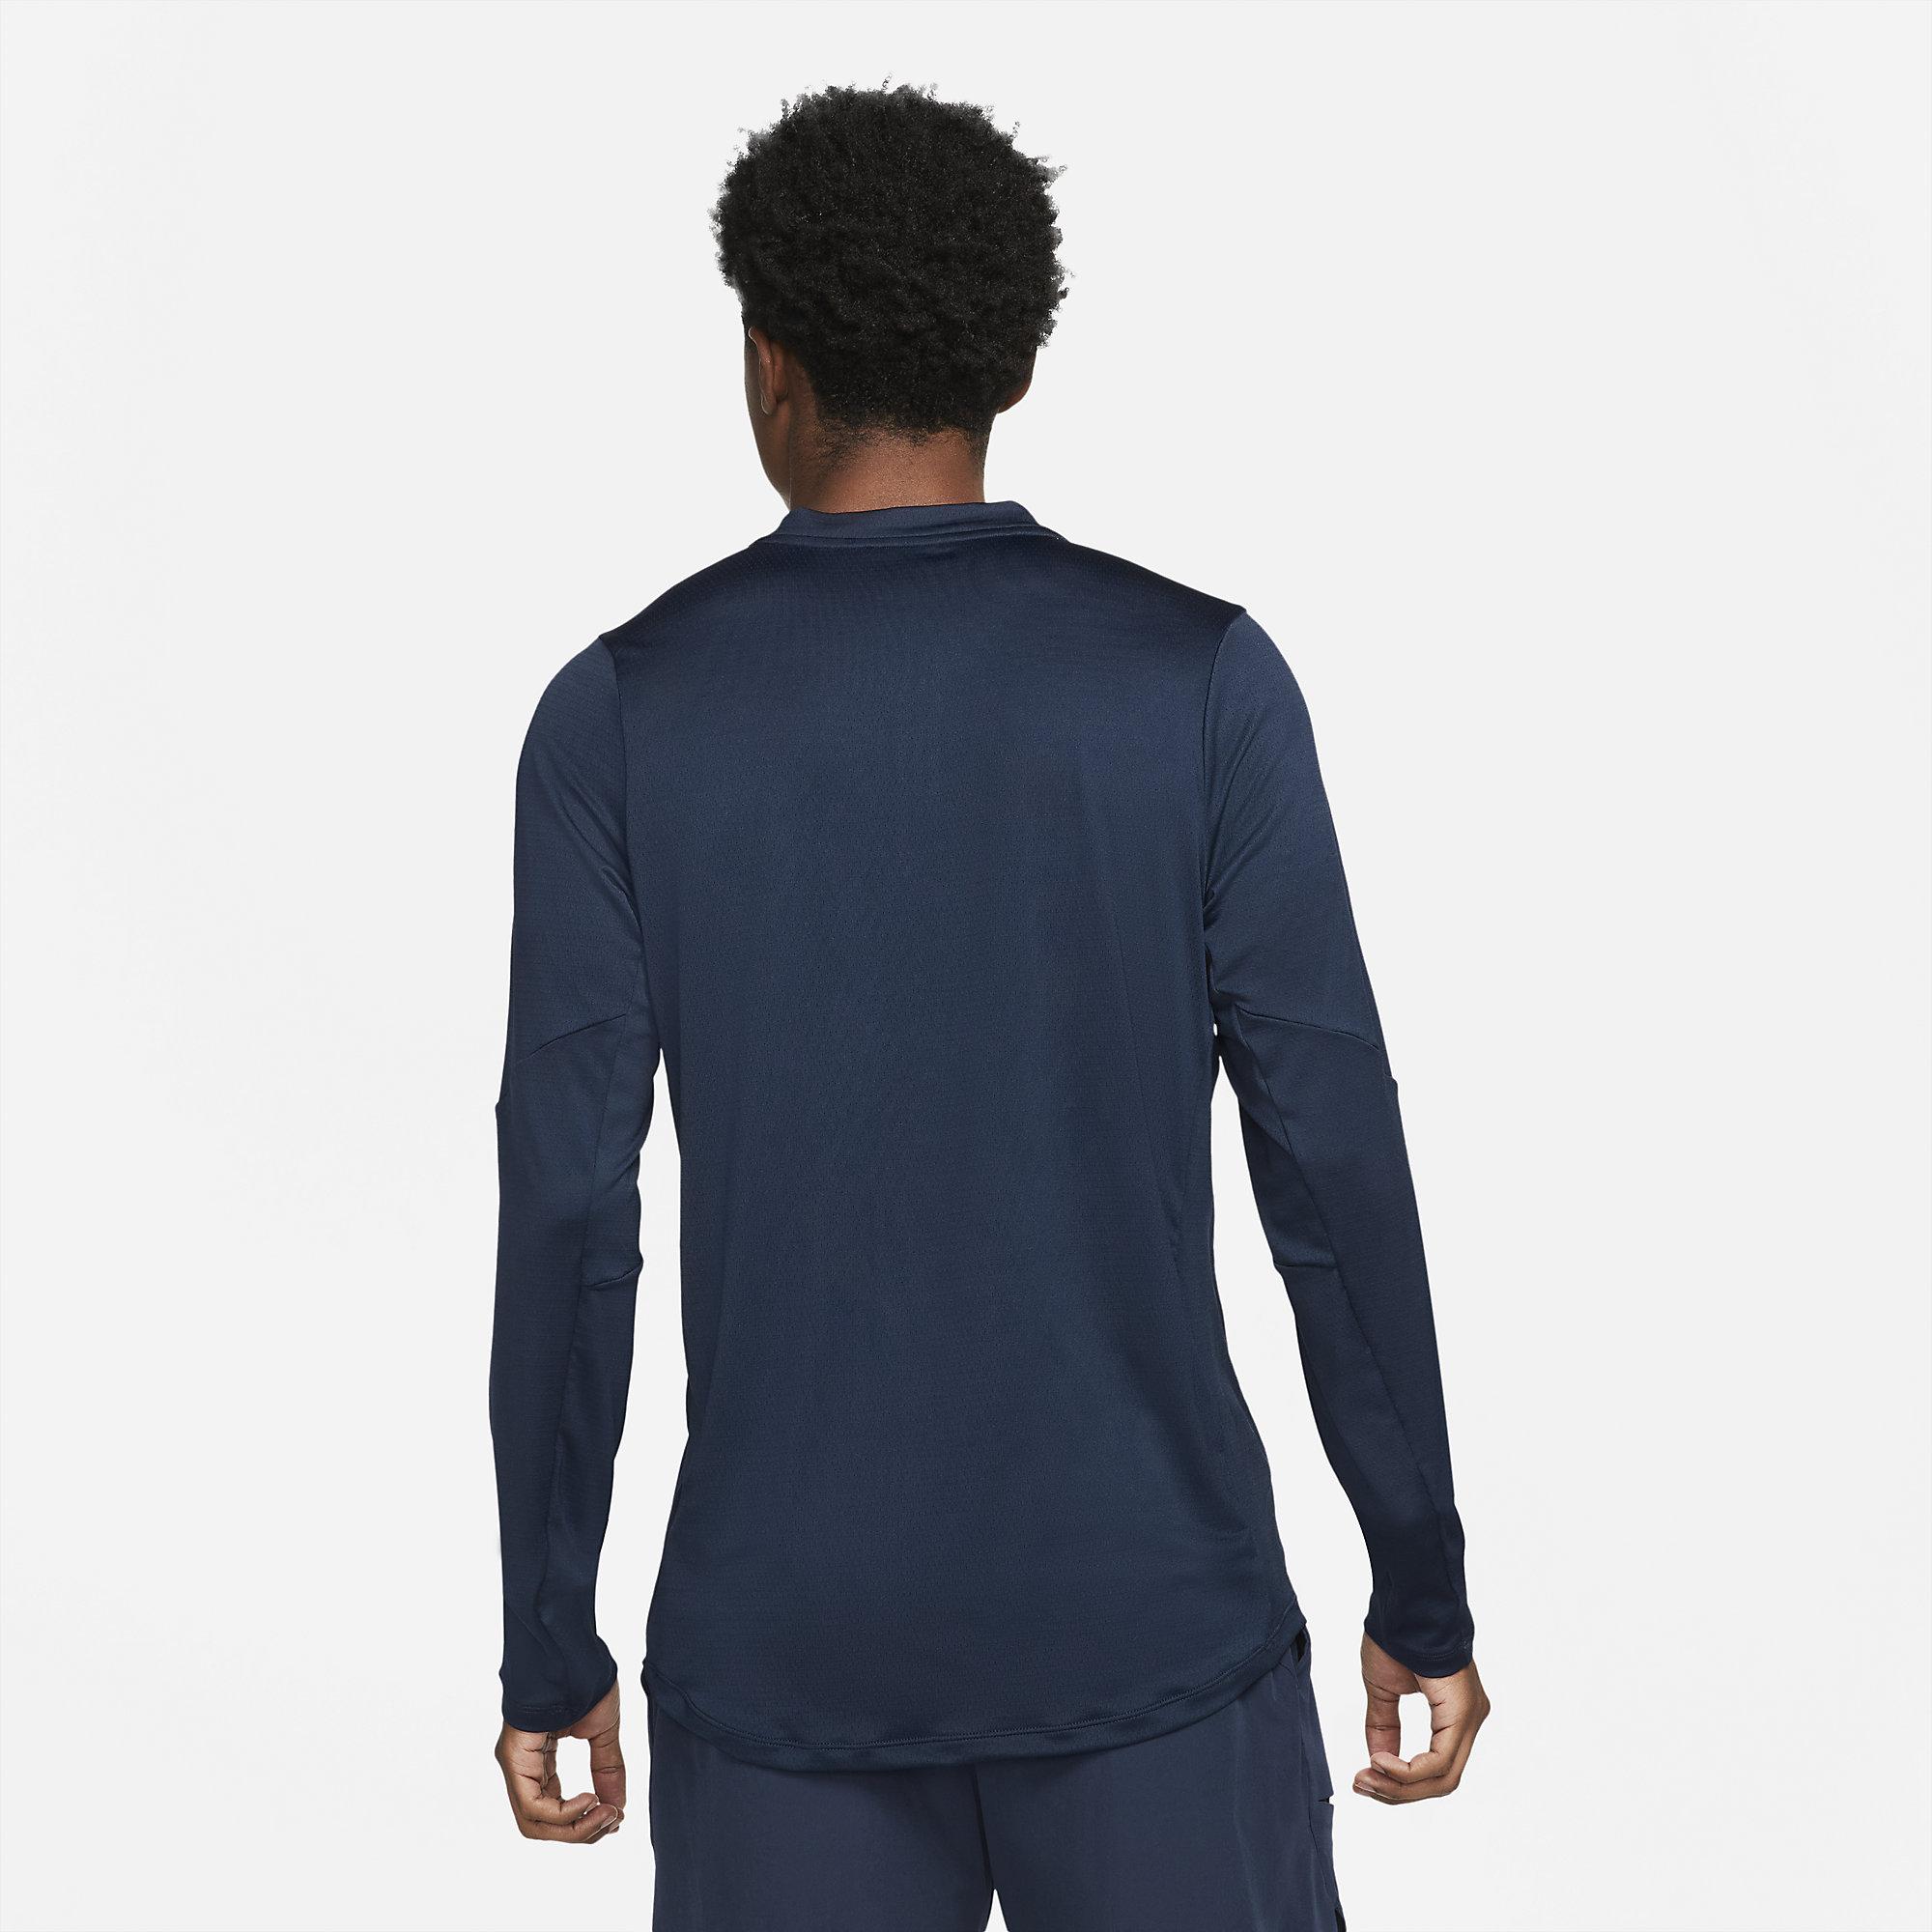 Nike Mens Advantage Half-Zip Long Sleeve Top - Obsidian - Tennisnuts.com